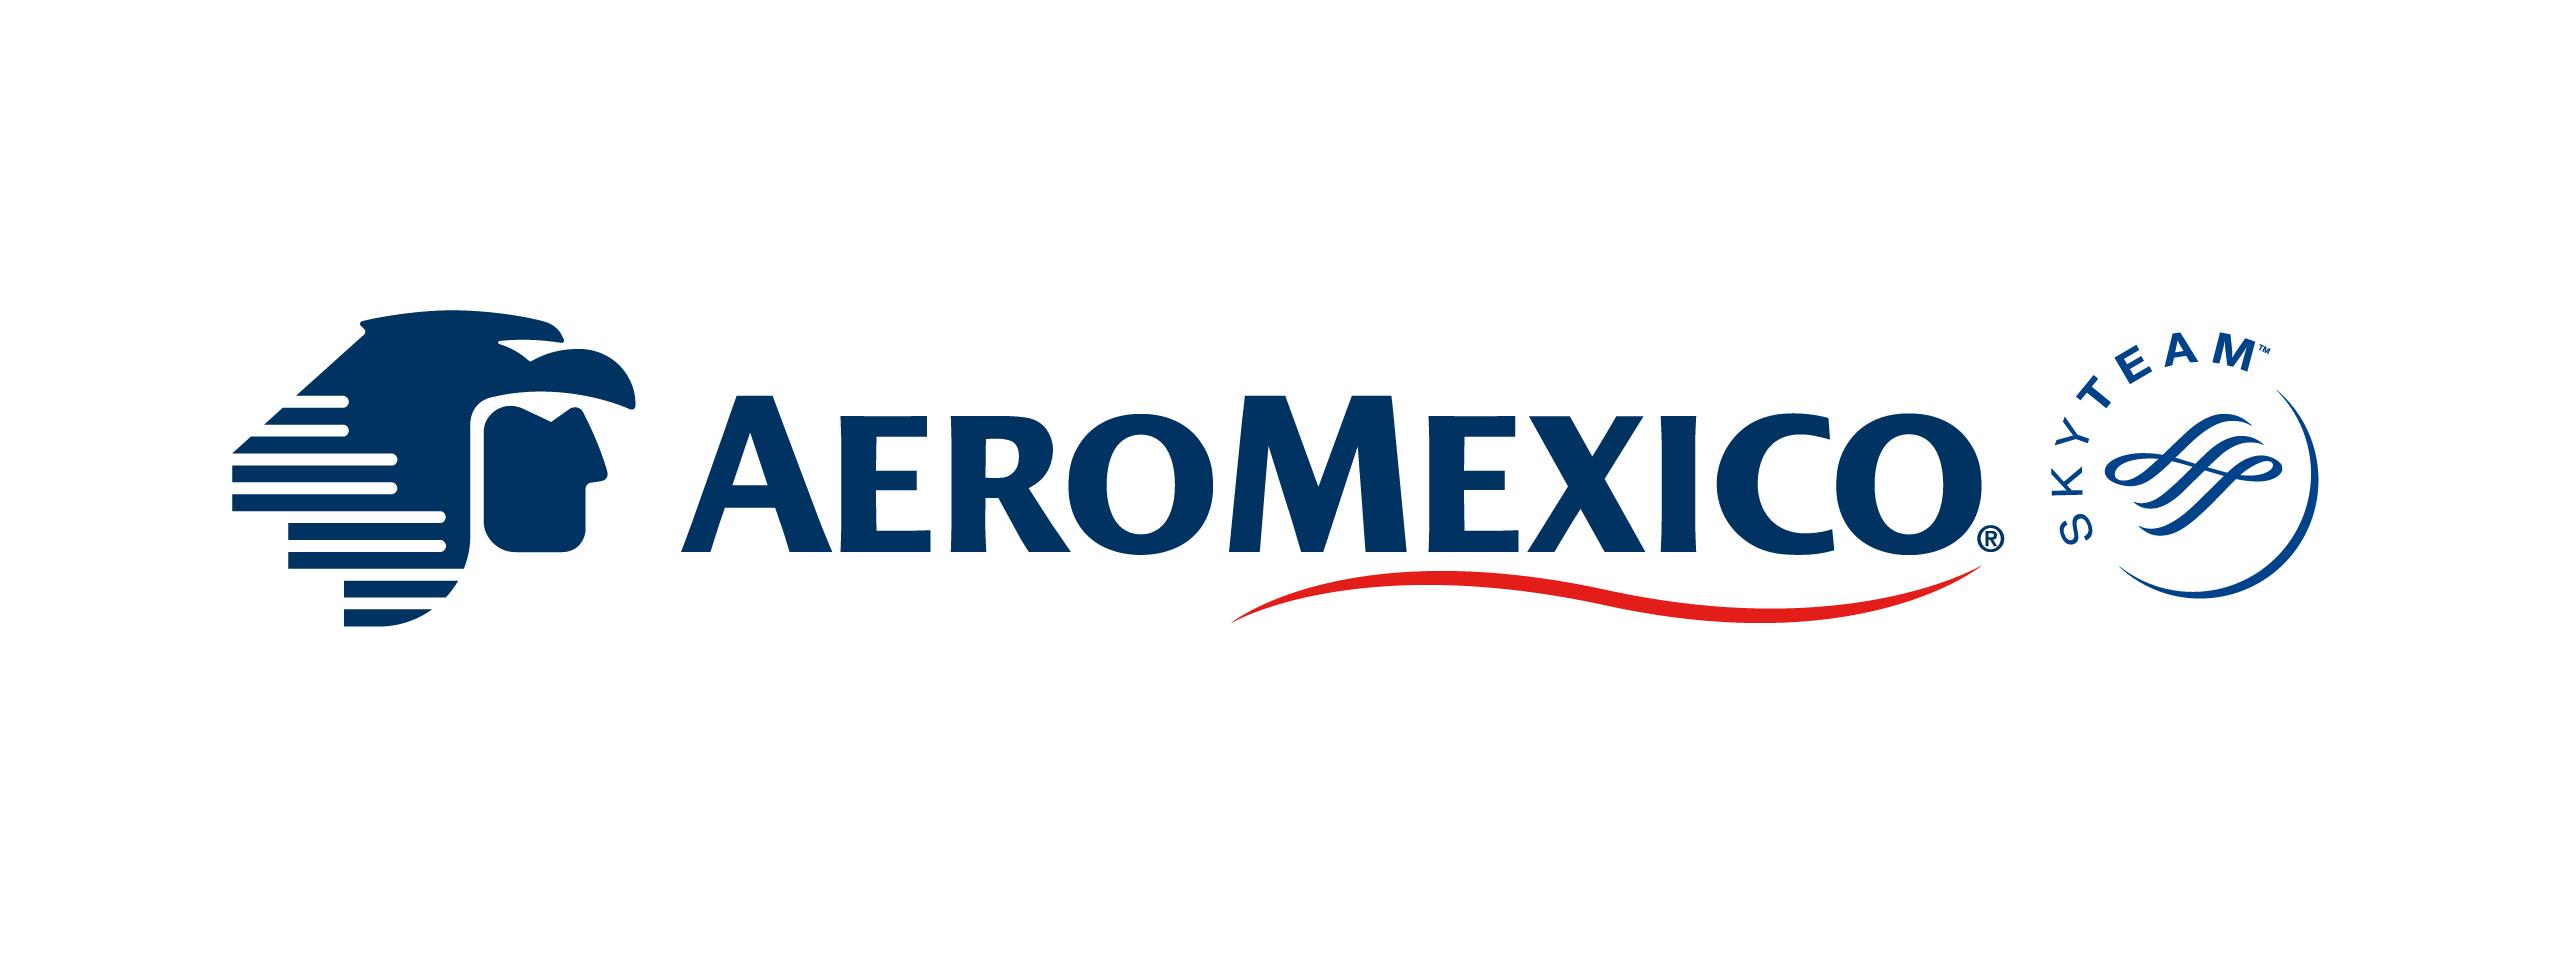 Aeromexico Logo - Aeroméxico Logo - Community Legal Services of Mid Florida